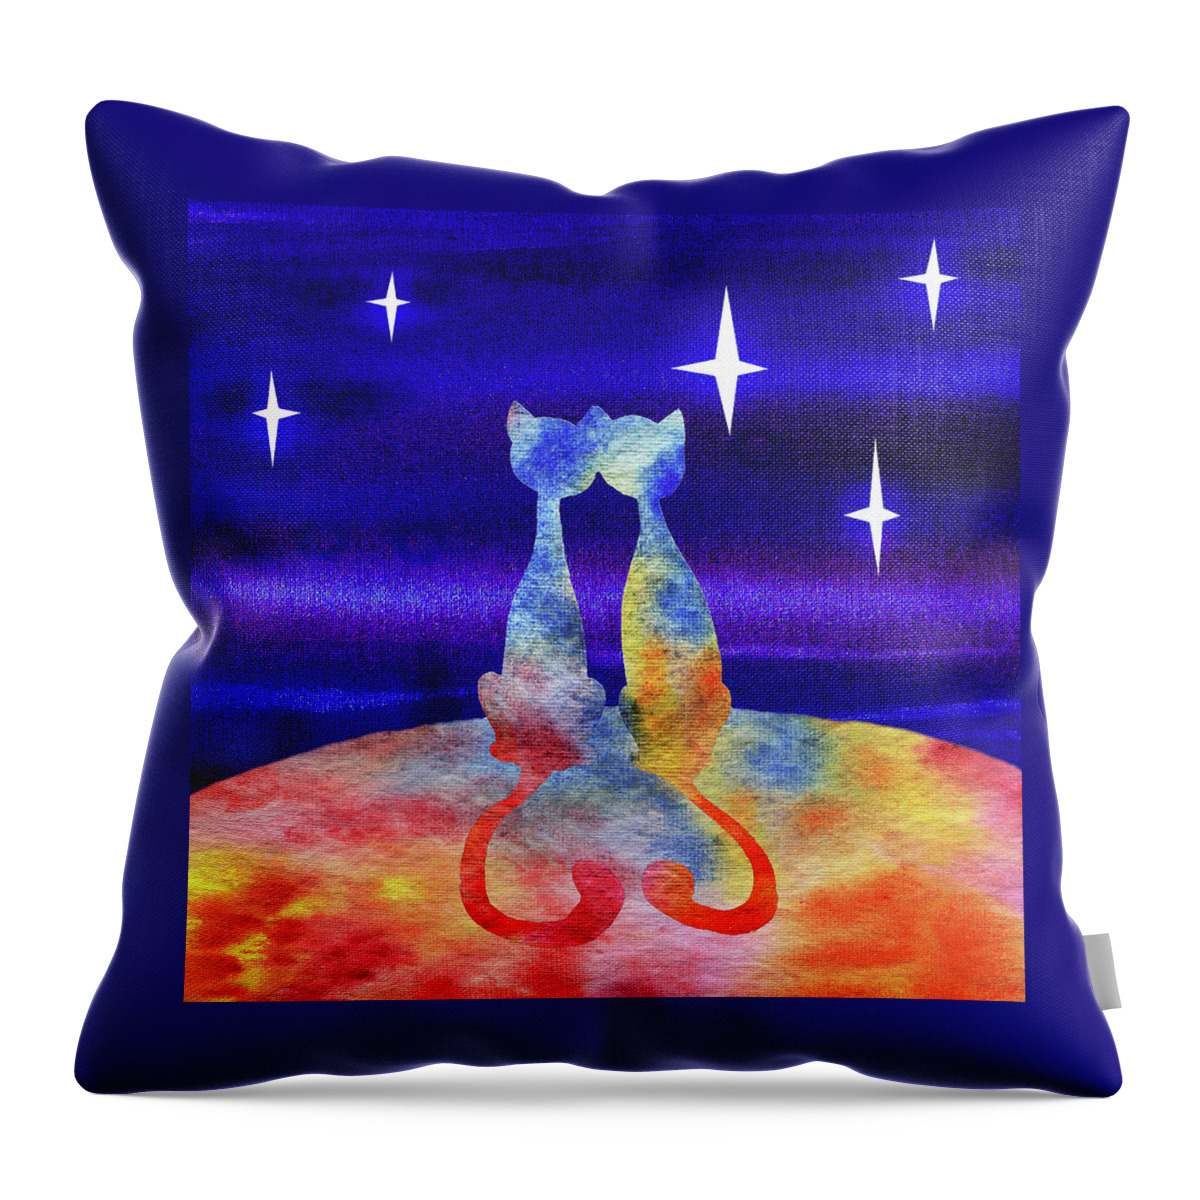 Two Cats Starry Night Silhouette Throw Pillow featuring the painting Two Cats Starry Night Silhouette by Irina Sztukowski